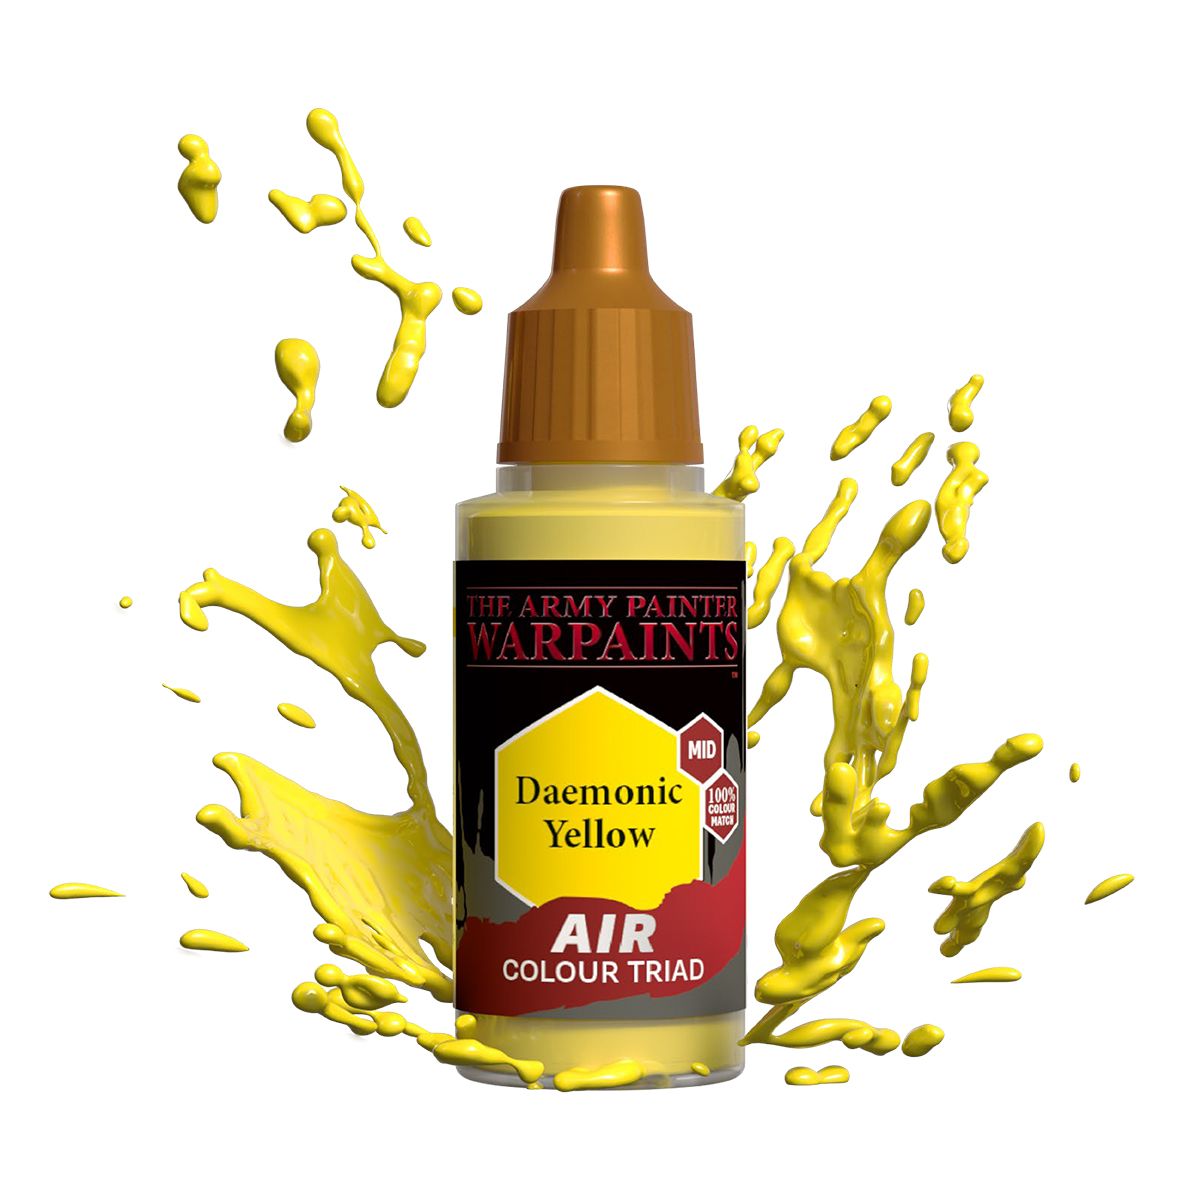 Army Painter Warpaint Air - Daemonic Yellow (18ml) - Loaded Dice